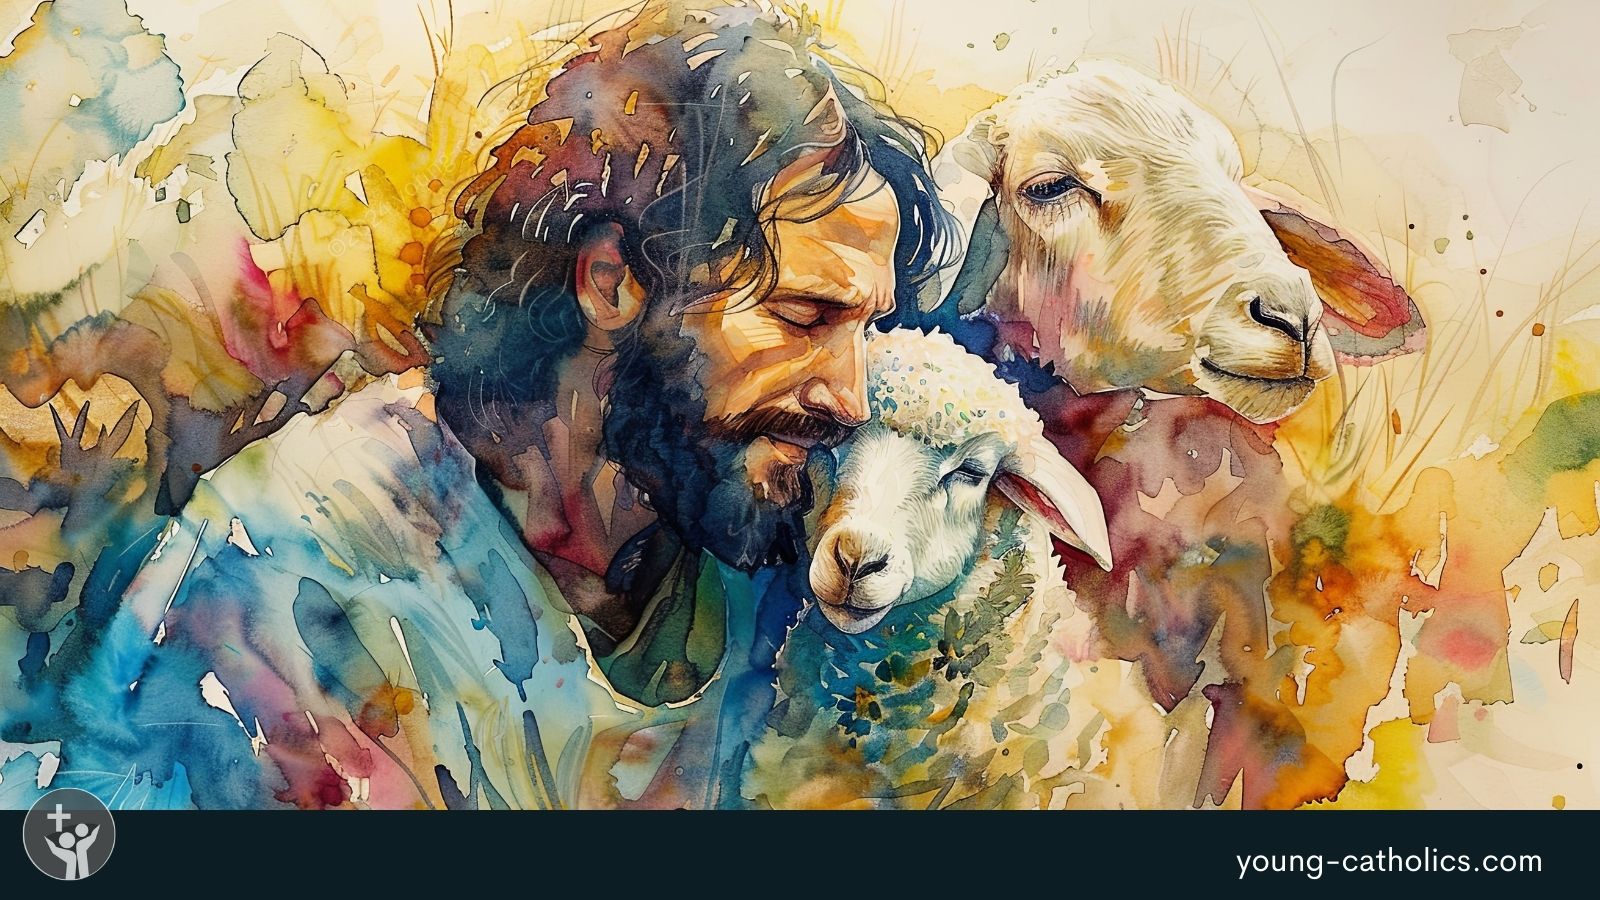 4th Sunday of Easter Year B - Good Shepherd Sunday